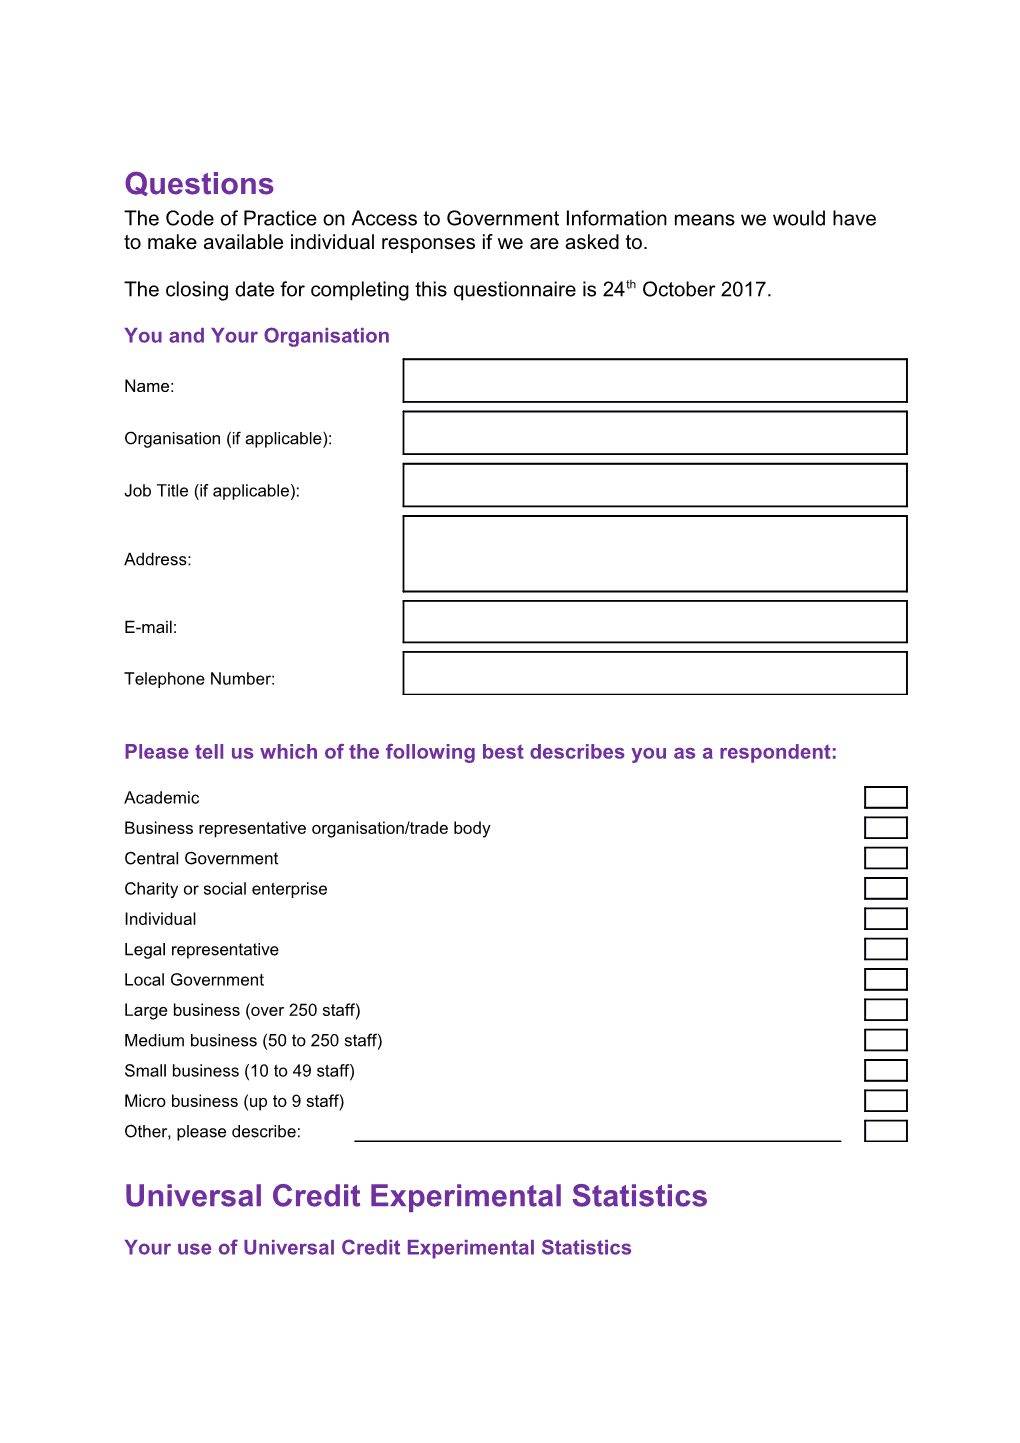 Universal Credit Experimental Statistics: Consultation